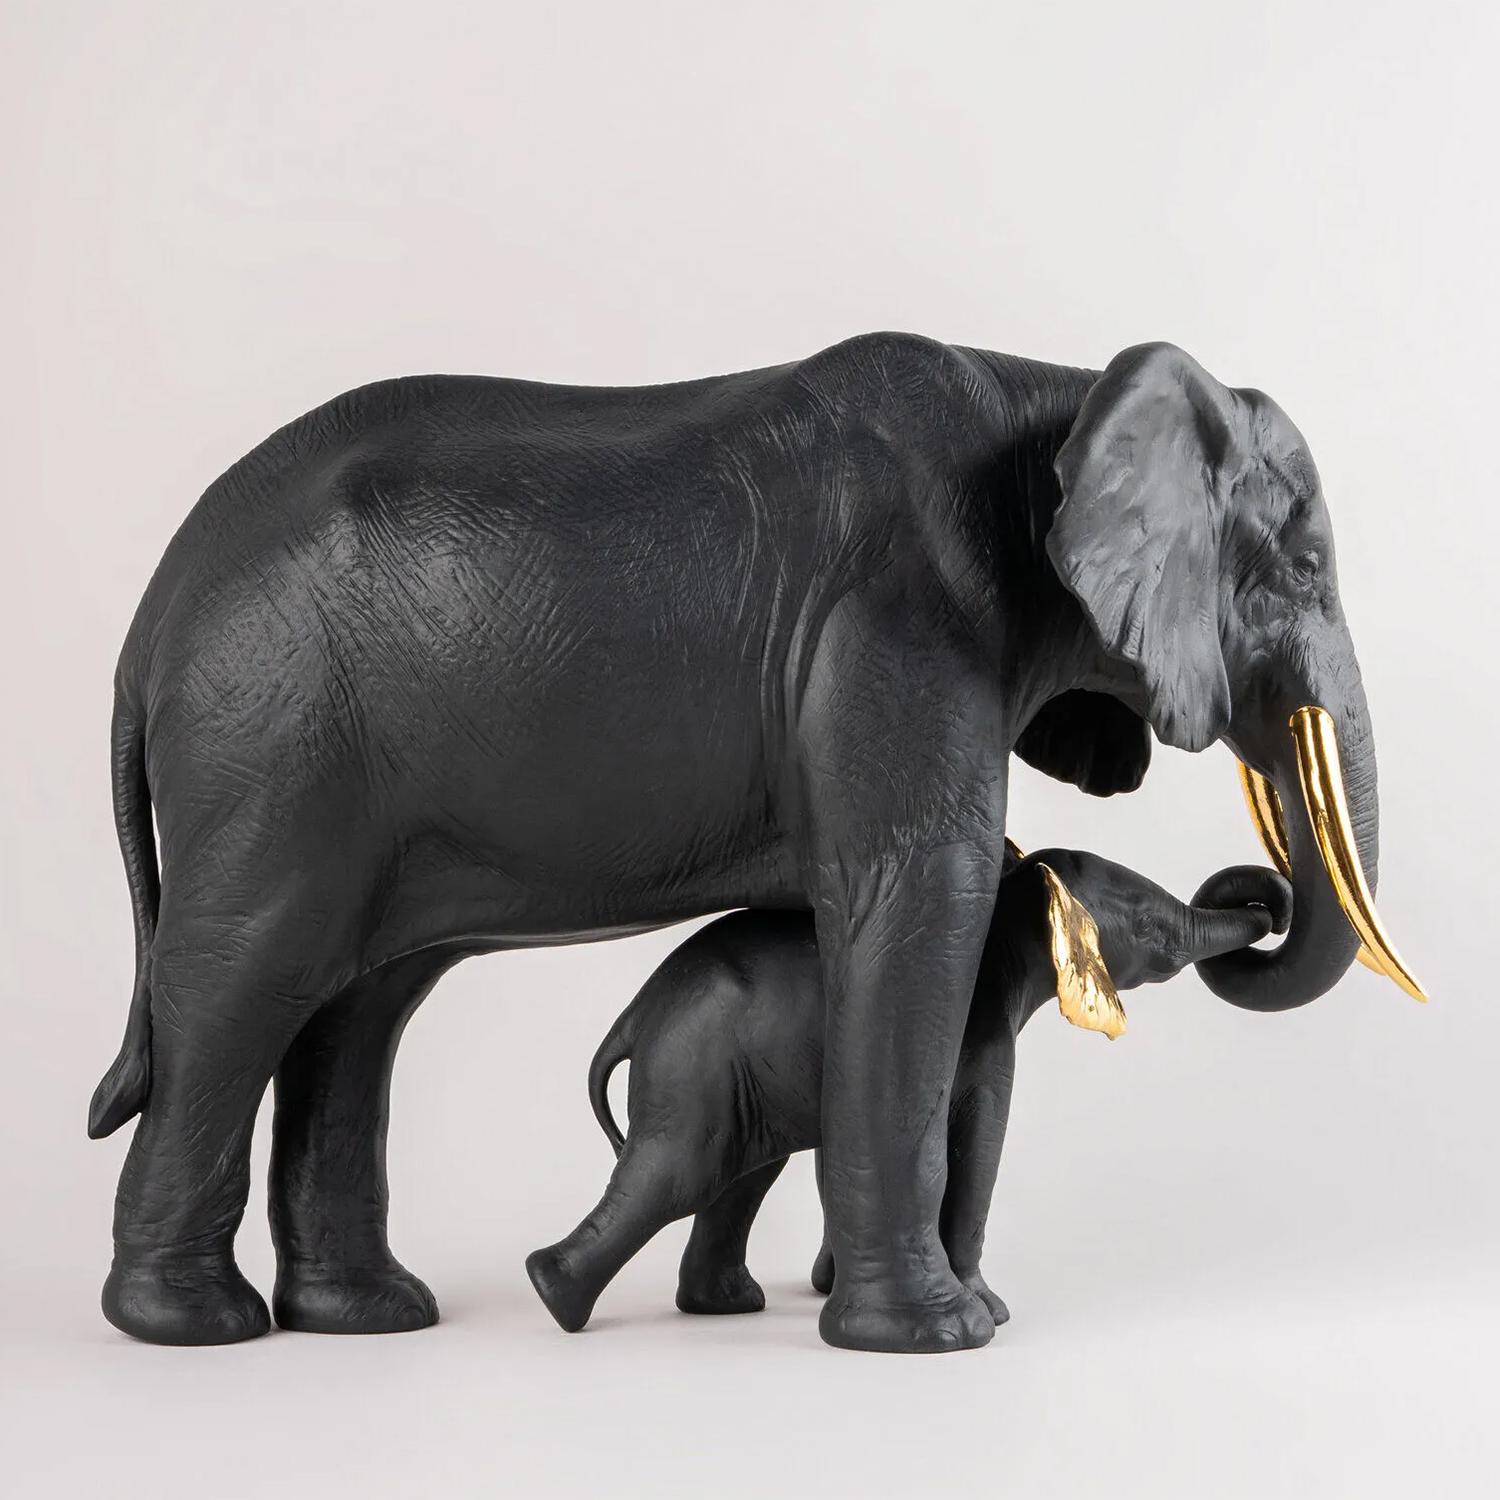 Spanish Elephants Black Sculpture For Sale